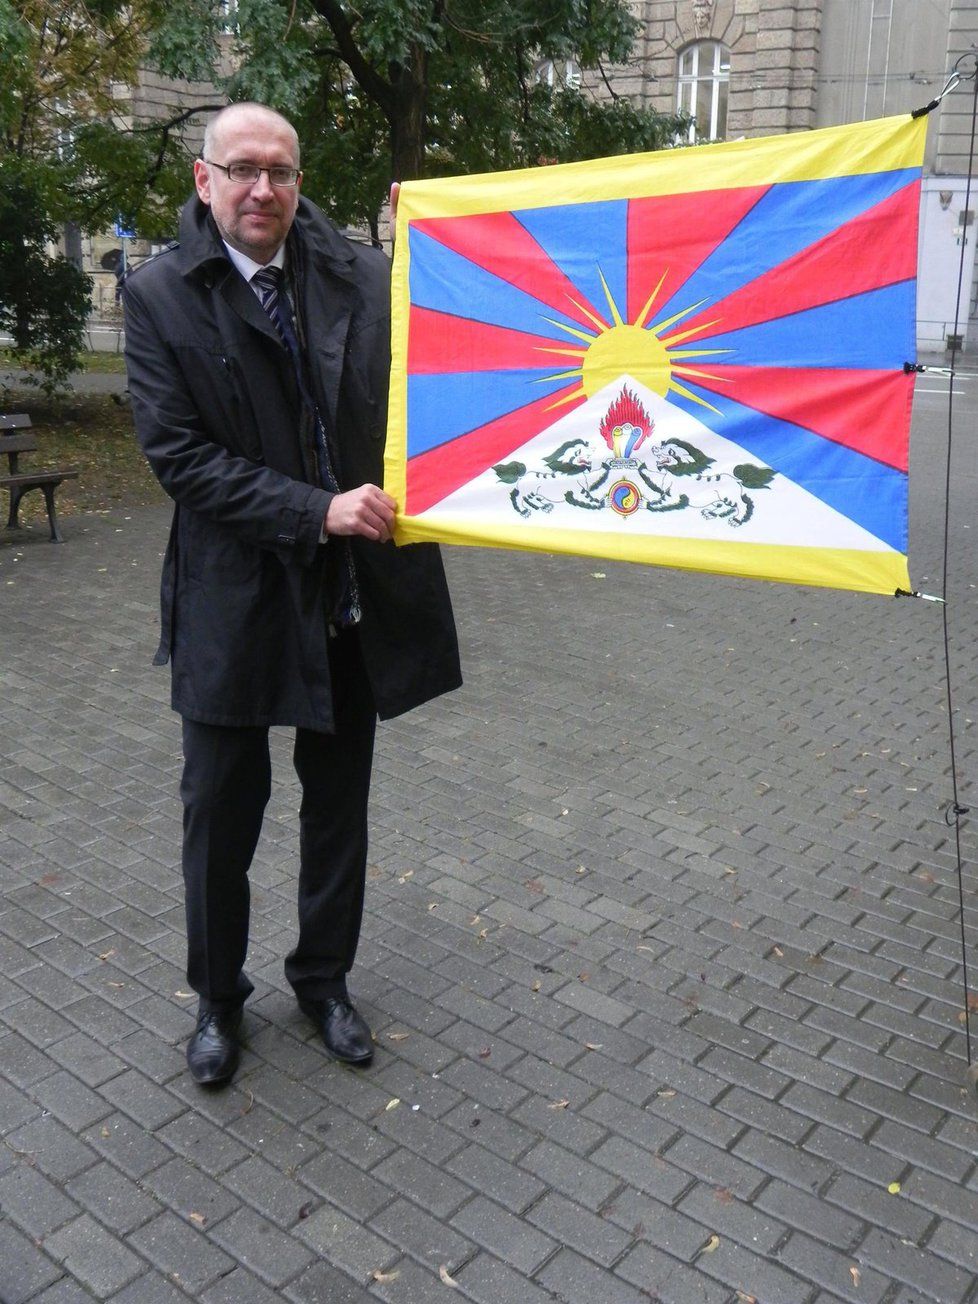 Rektor Masarykovy univerzity Mikuláš Bek s tibetskou vlajkou